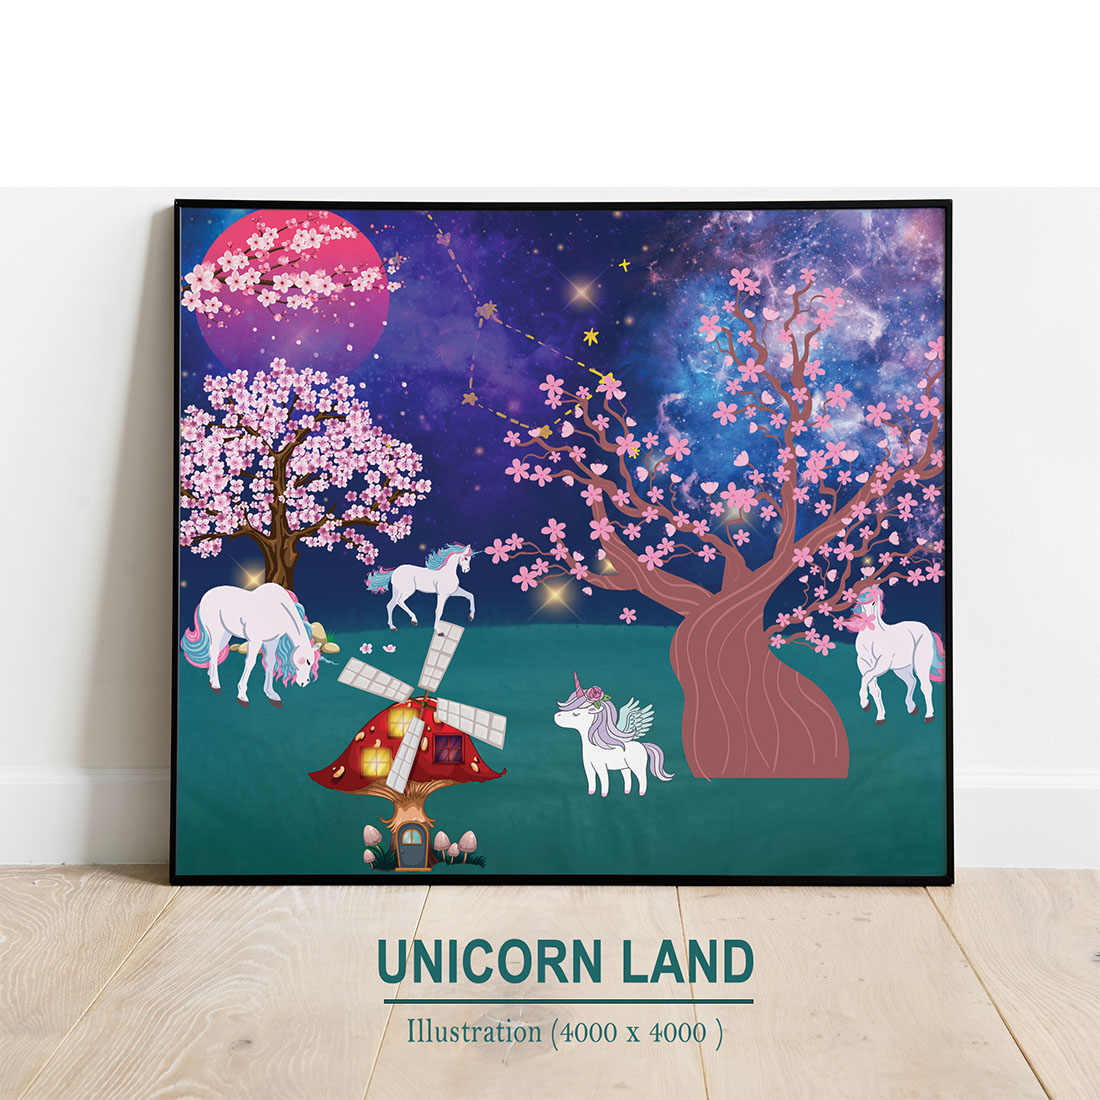 Unicorn Land Illustration main cover.